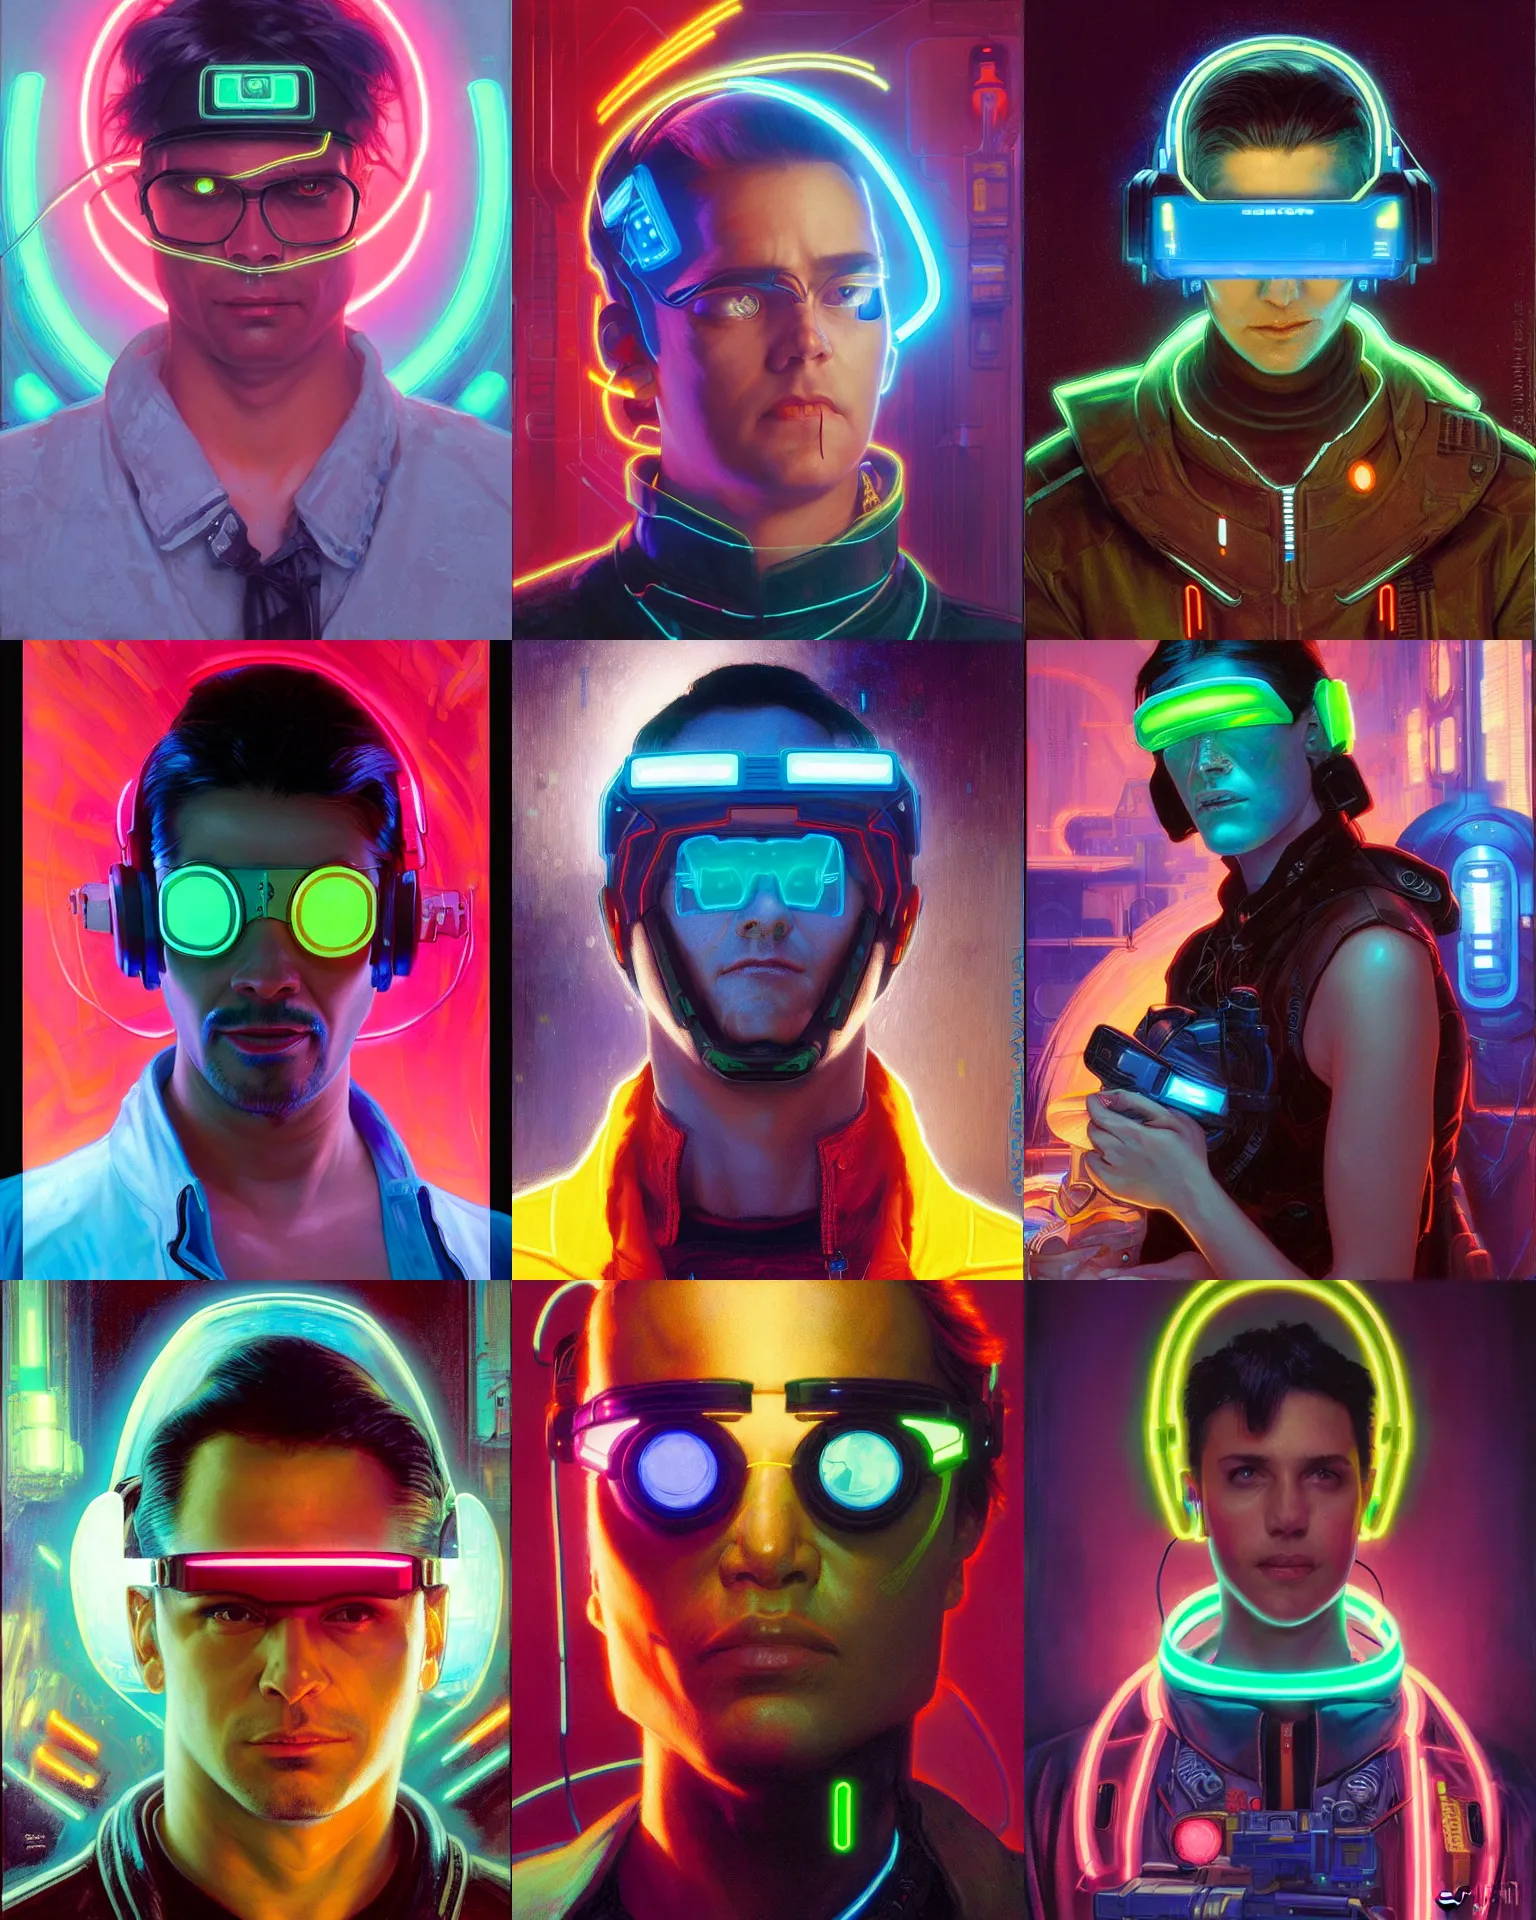 Prompt: neon cyberpunk hacker with glowing geordi visor and headset headshot portrait painting by donato giancola, kilian eng, rhads, hayao miyazaki, alphonse mucha, mead schaeffer fashion photography